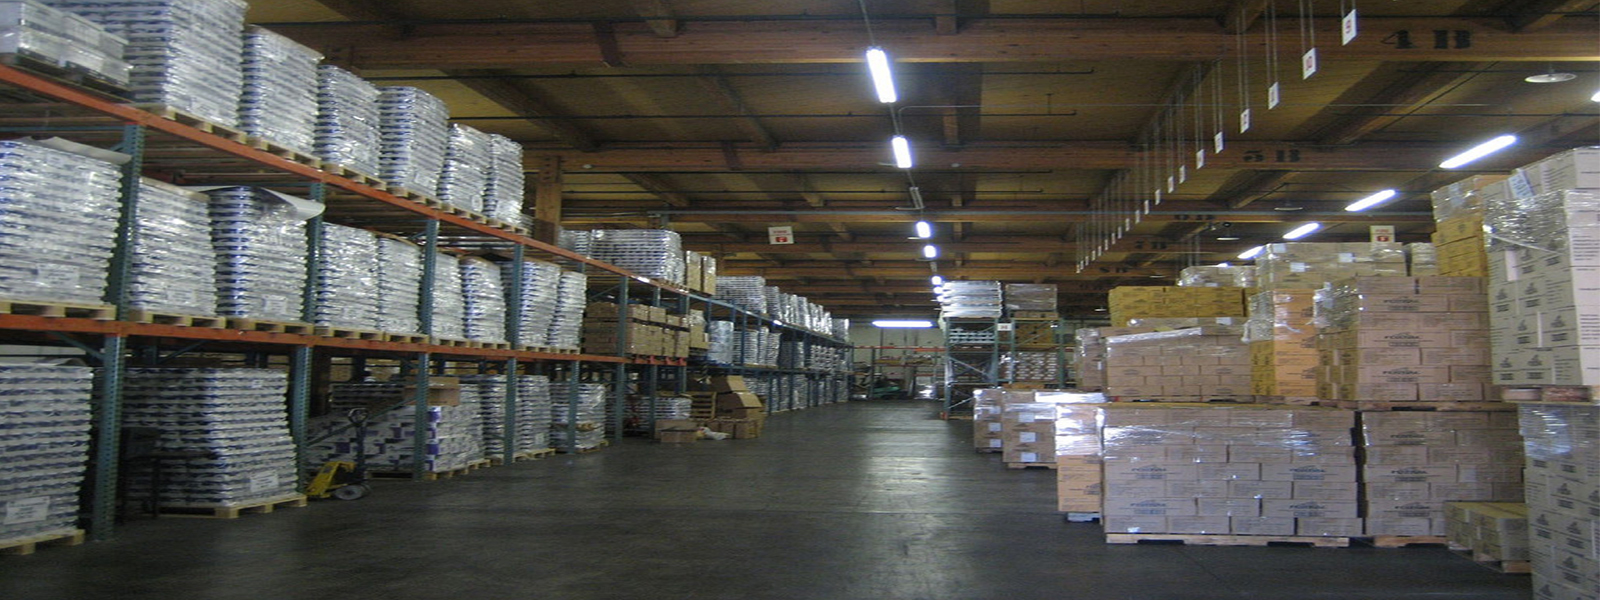 ABK warehouse